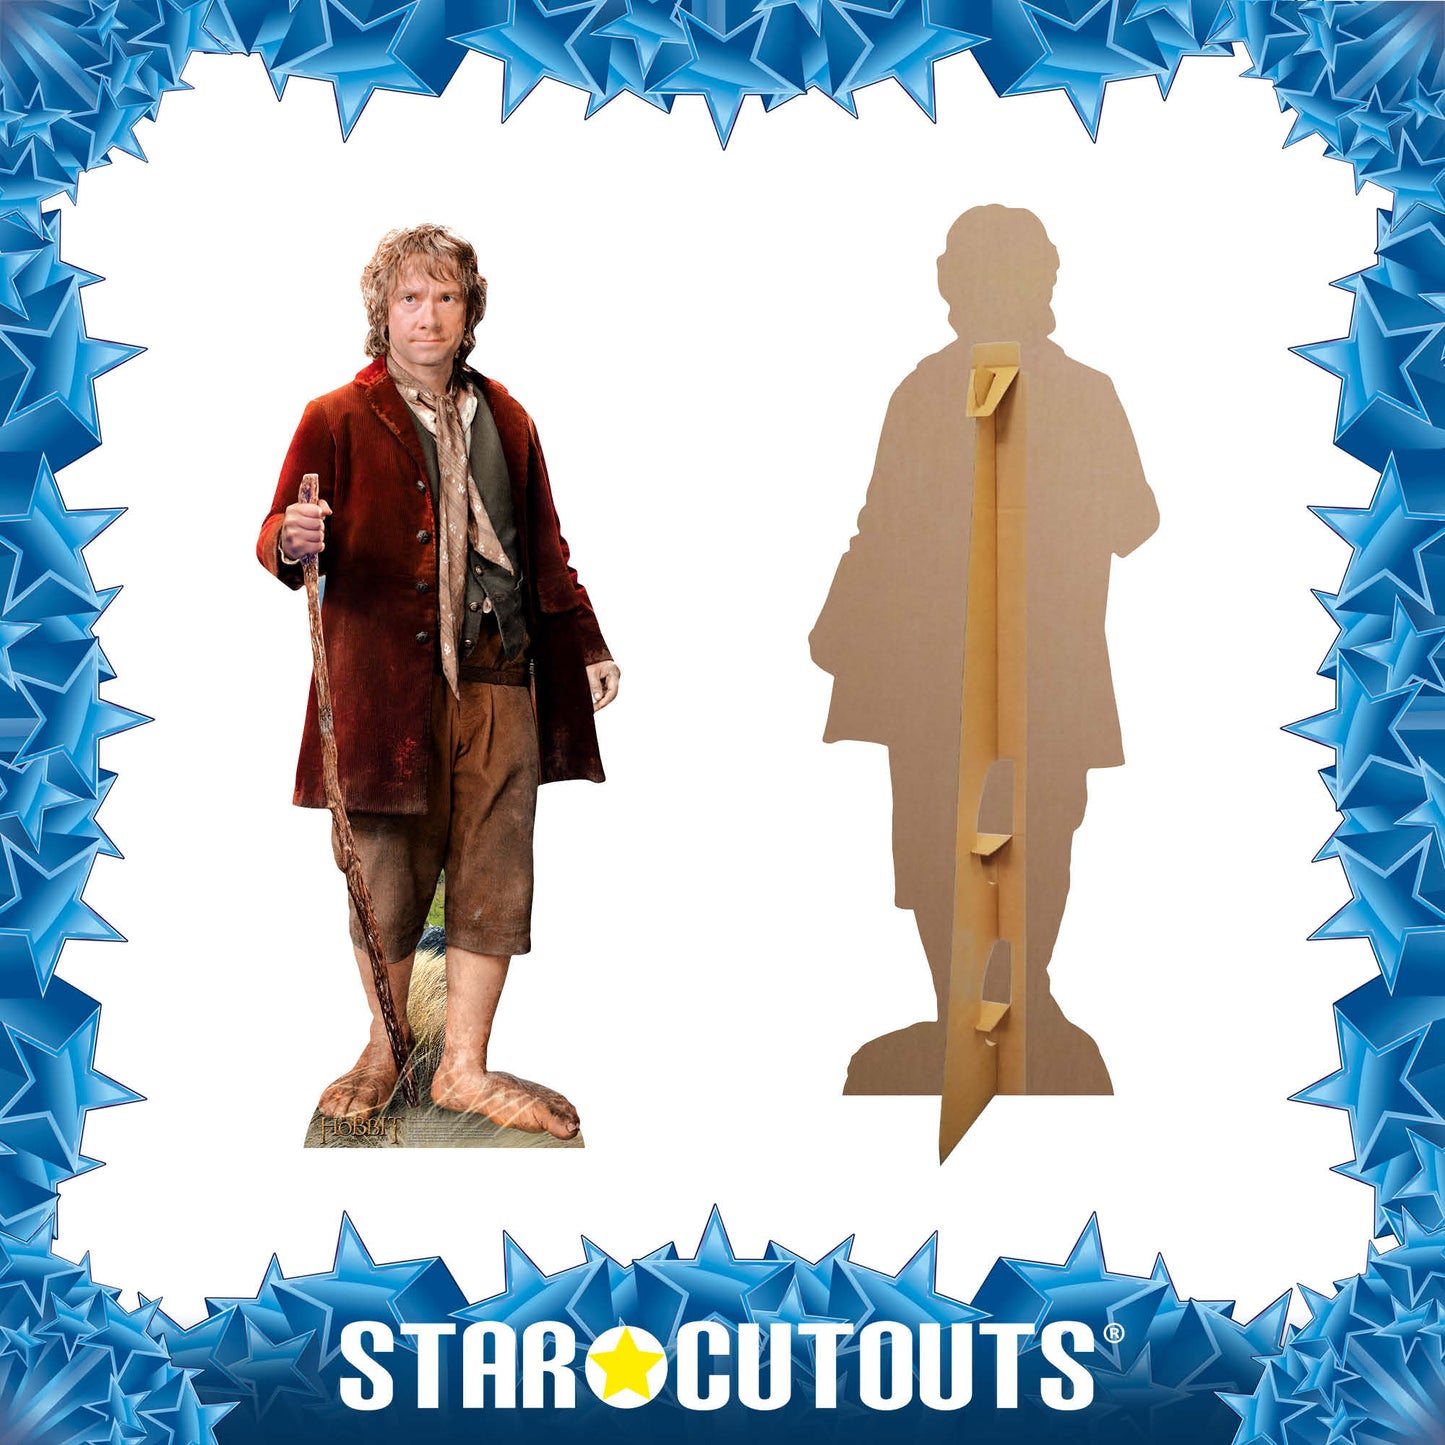 SC666 Bilbo Baggins Cardboard Cut Out Height 145cm